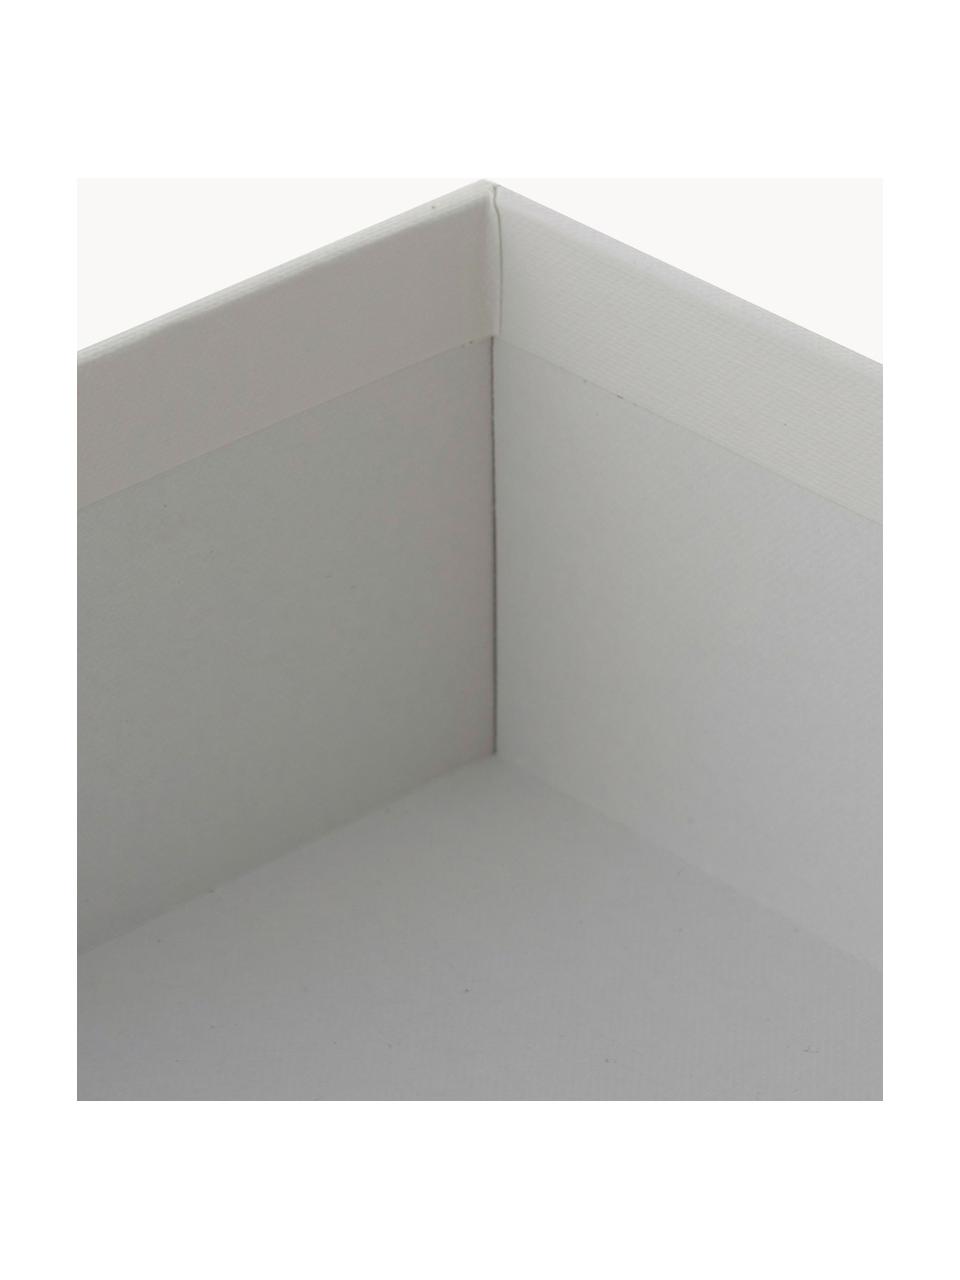 Bandeja para cartas Trey, Cartón laminado macizo, Blanco, An 23 x F 32 cm